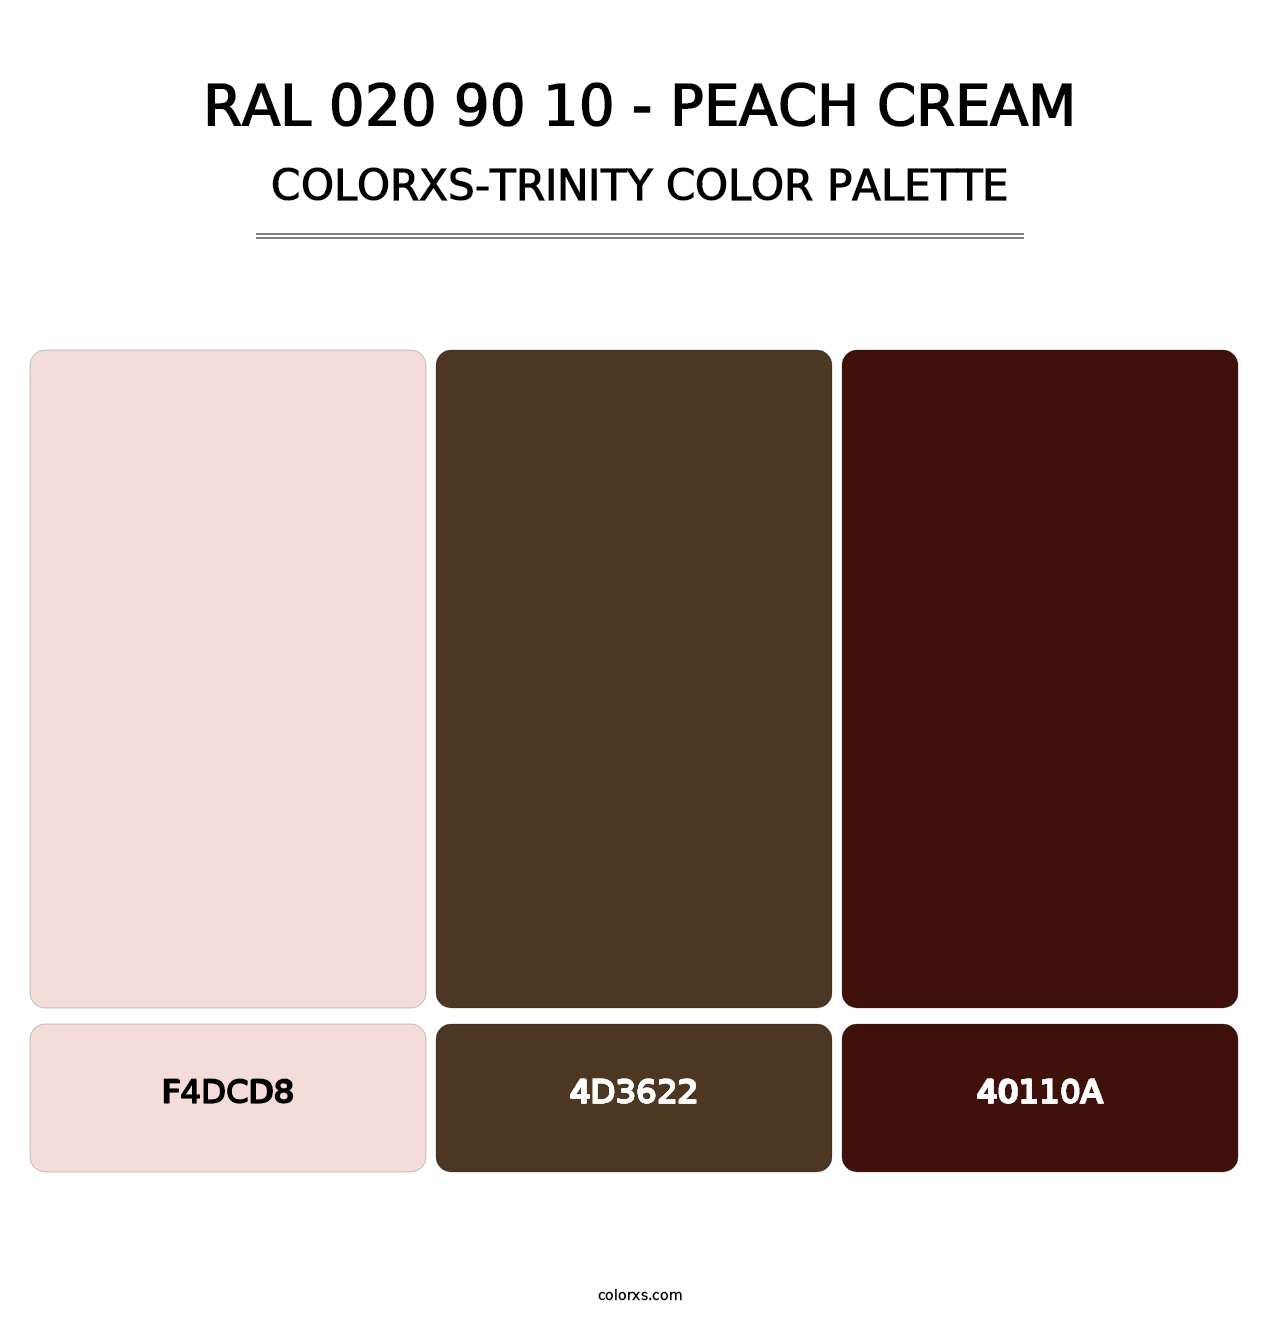 RAL 020 90 10 - Peach Cream - Colorxs Trinity Palette